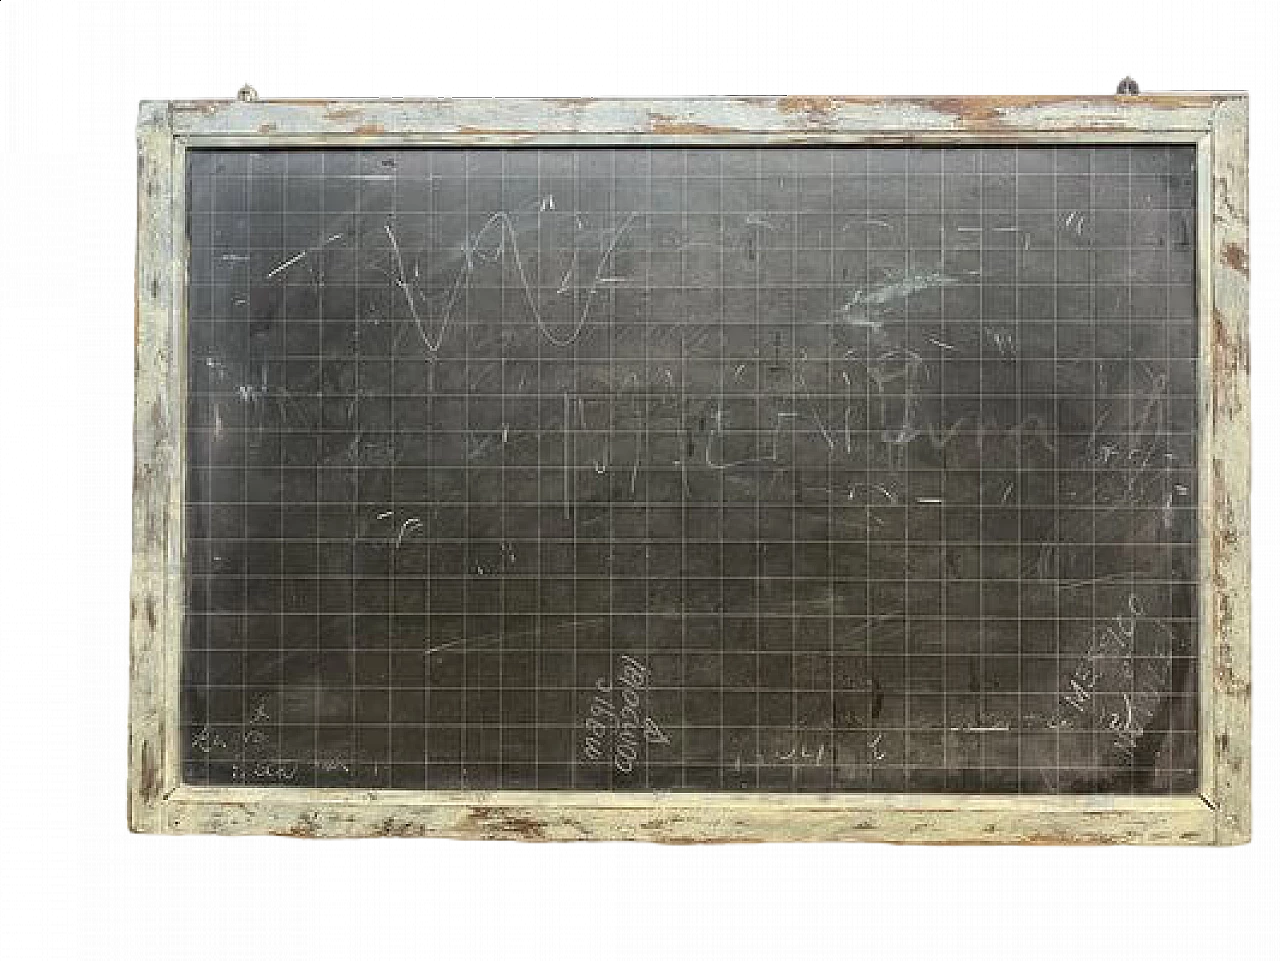 School blackbord, 1950s 6